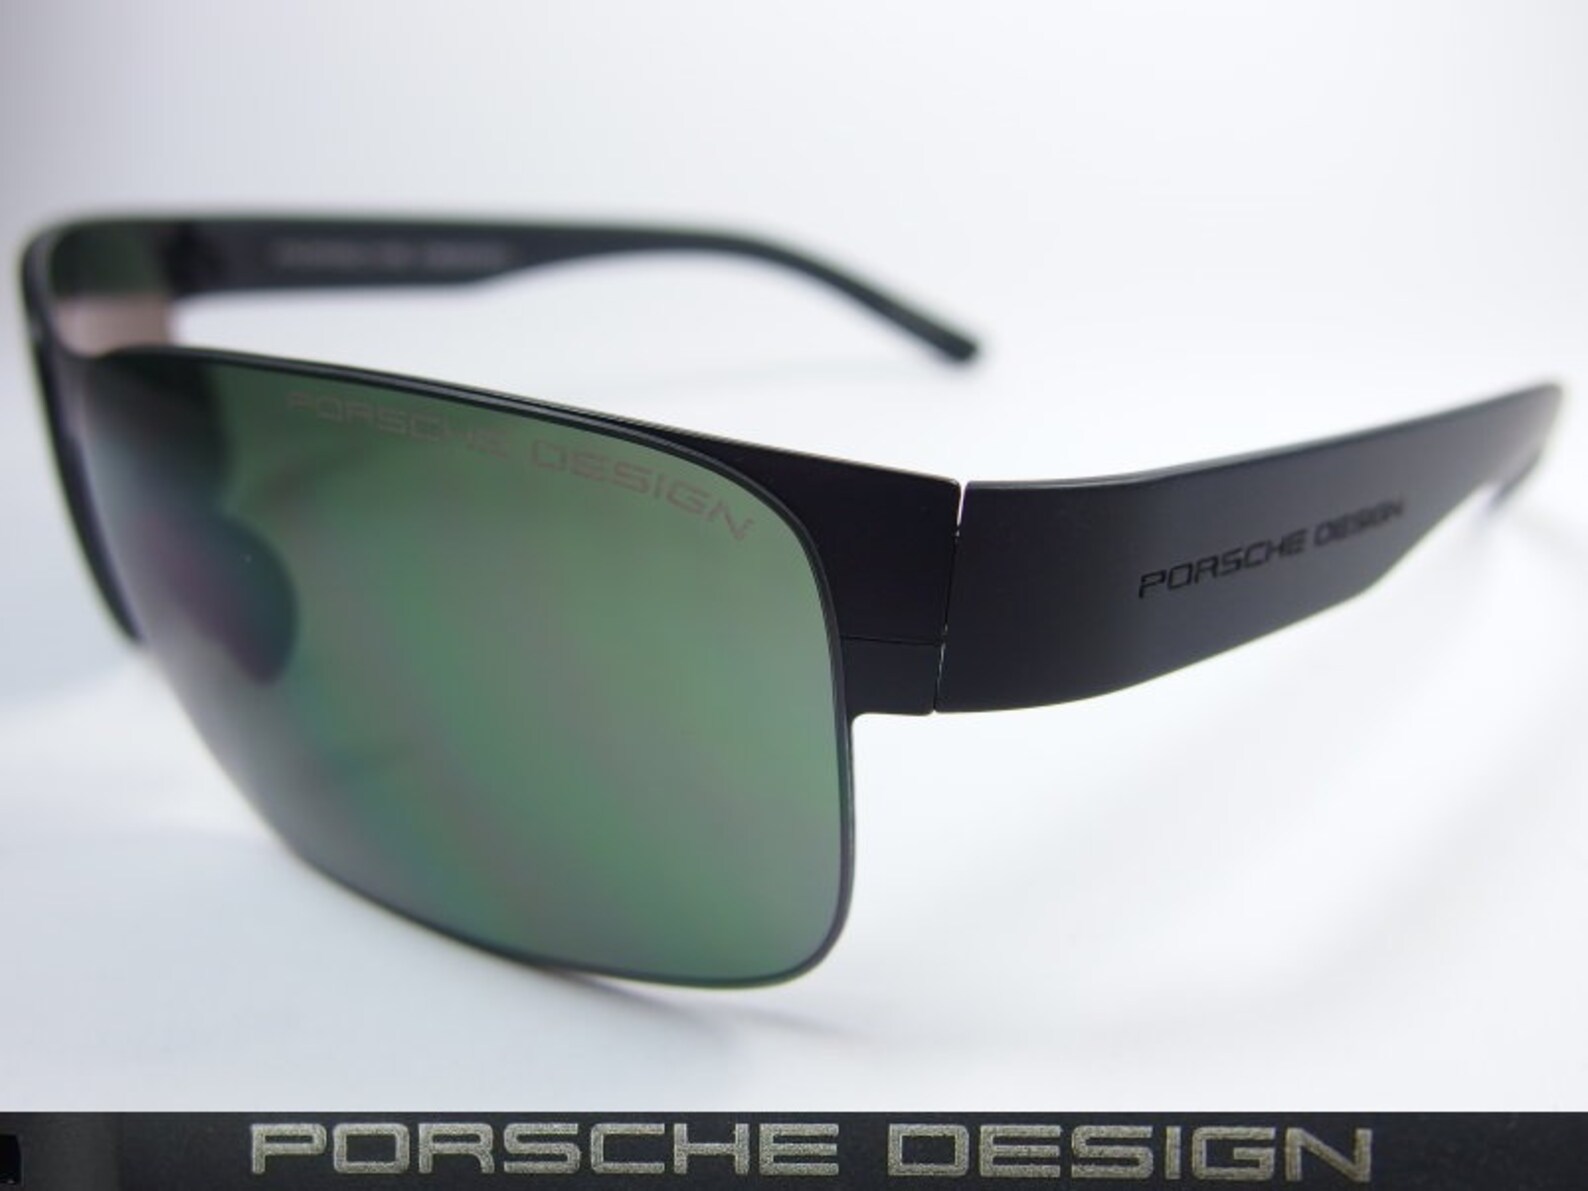 PORSCHE DESIGN P 8573 rectangular sunglasses spectacles | Etsy